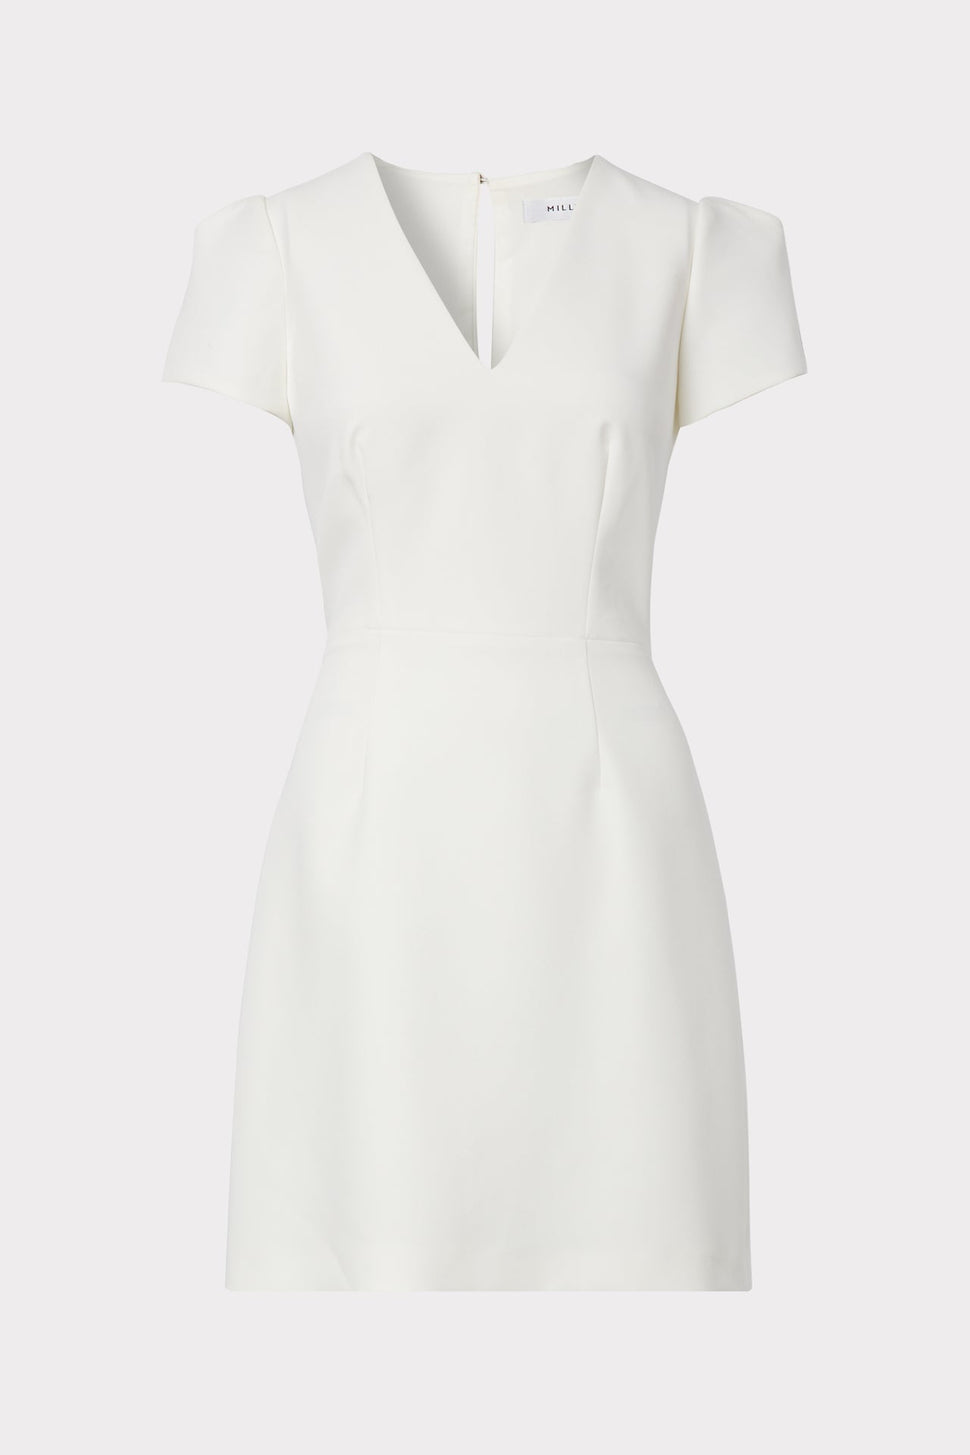 Cady Atalie Short Sleeve V-Neck Mini Dress in White | MILLY